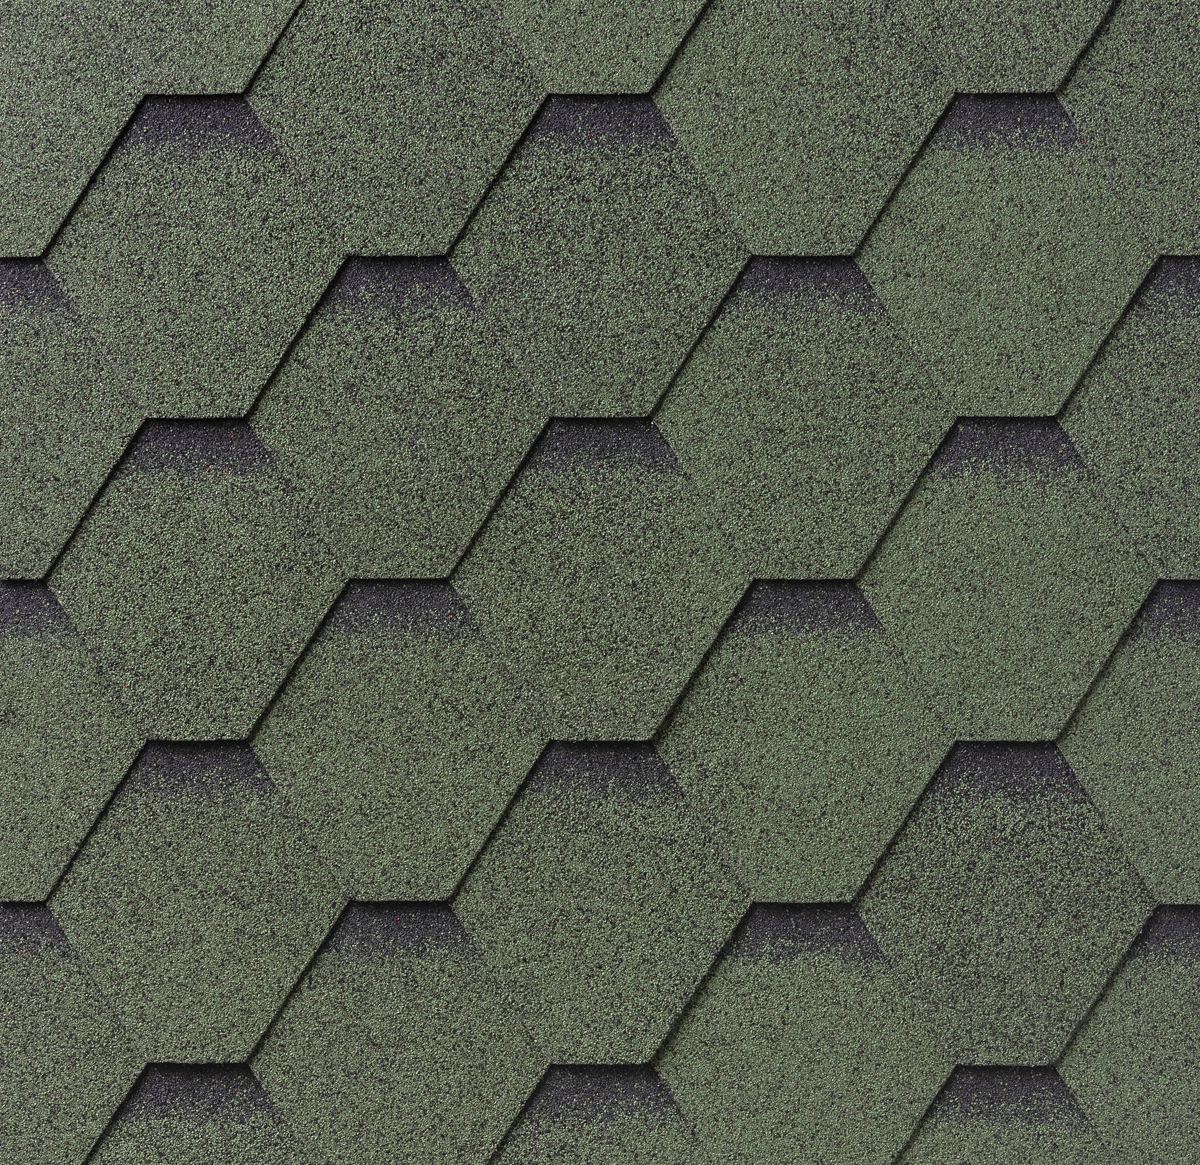 iko-armorshield-stone-coated-bitumen-roof